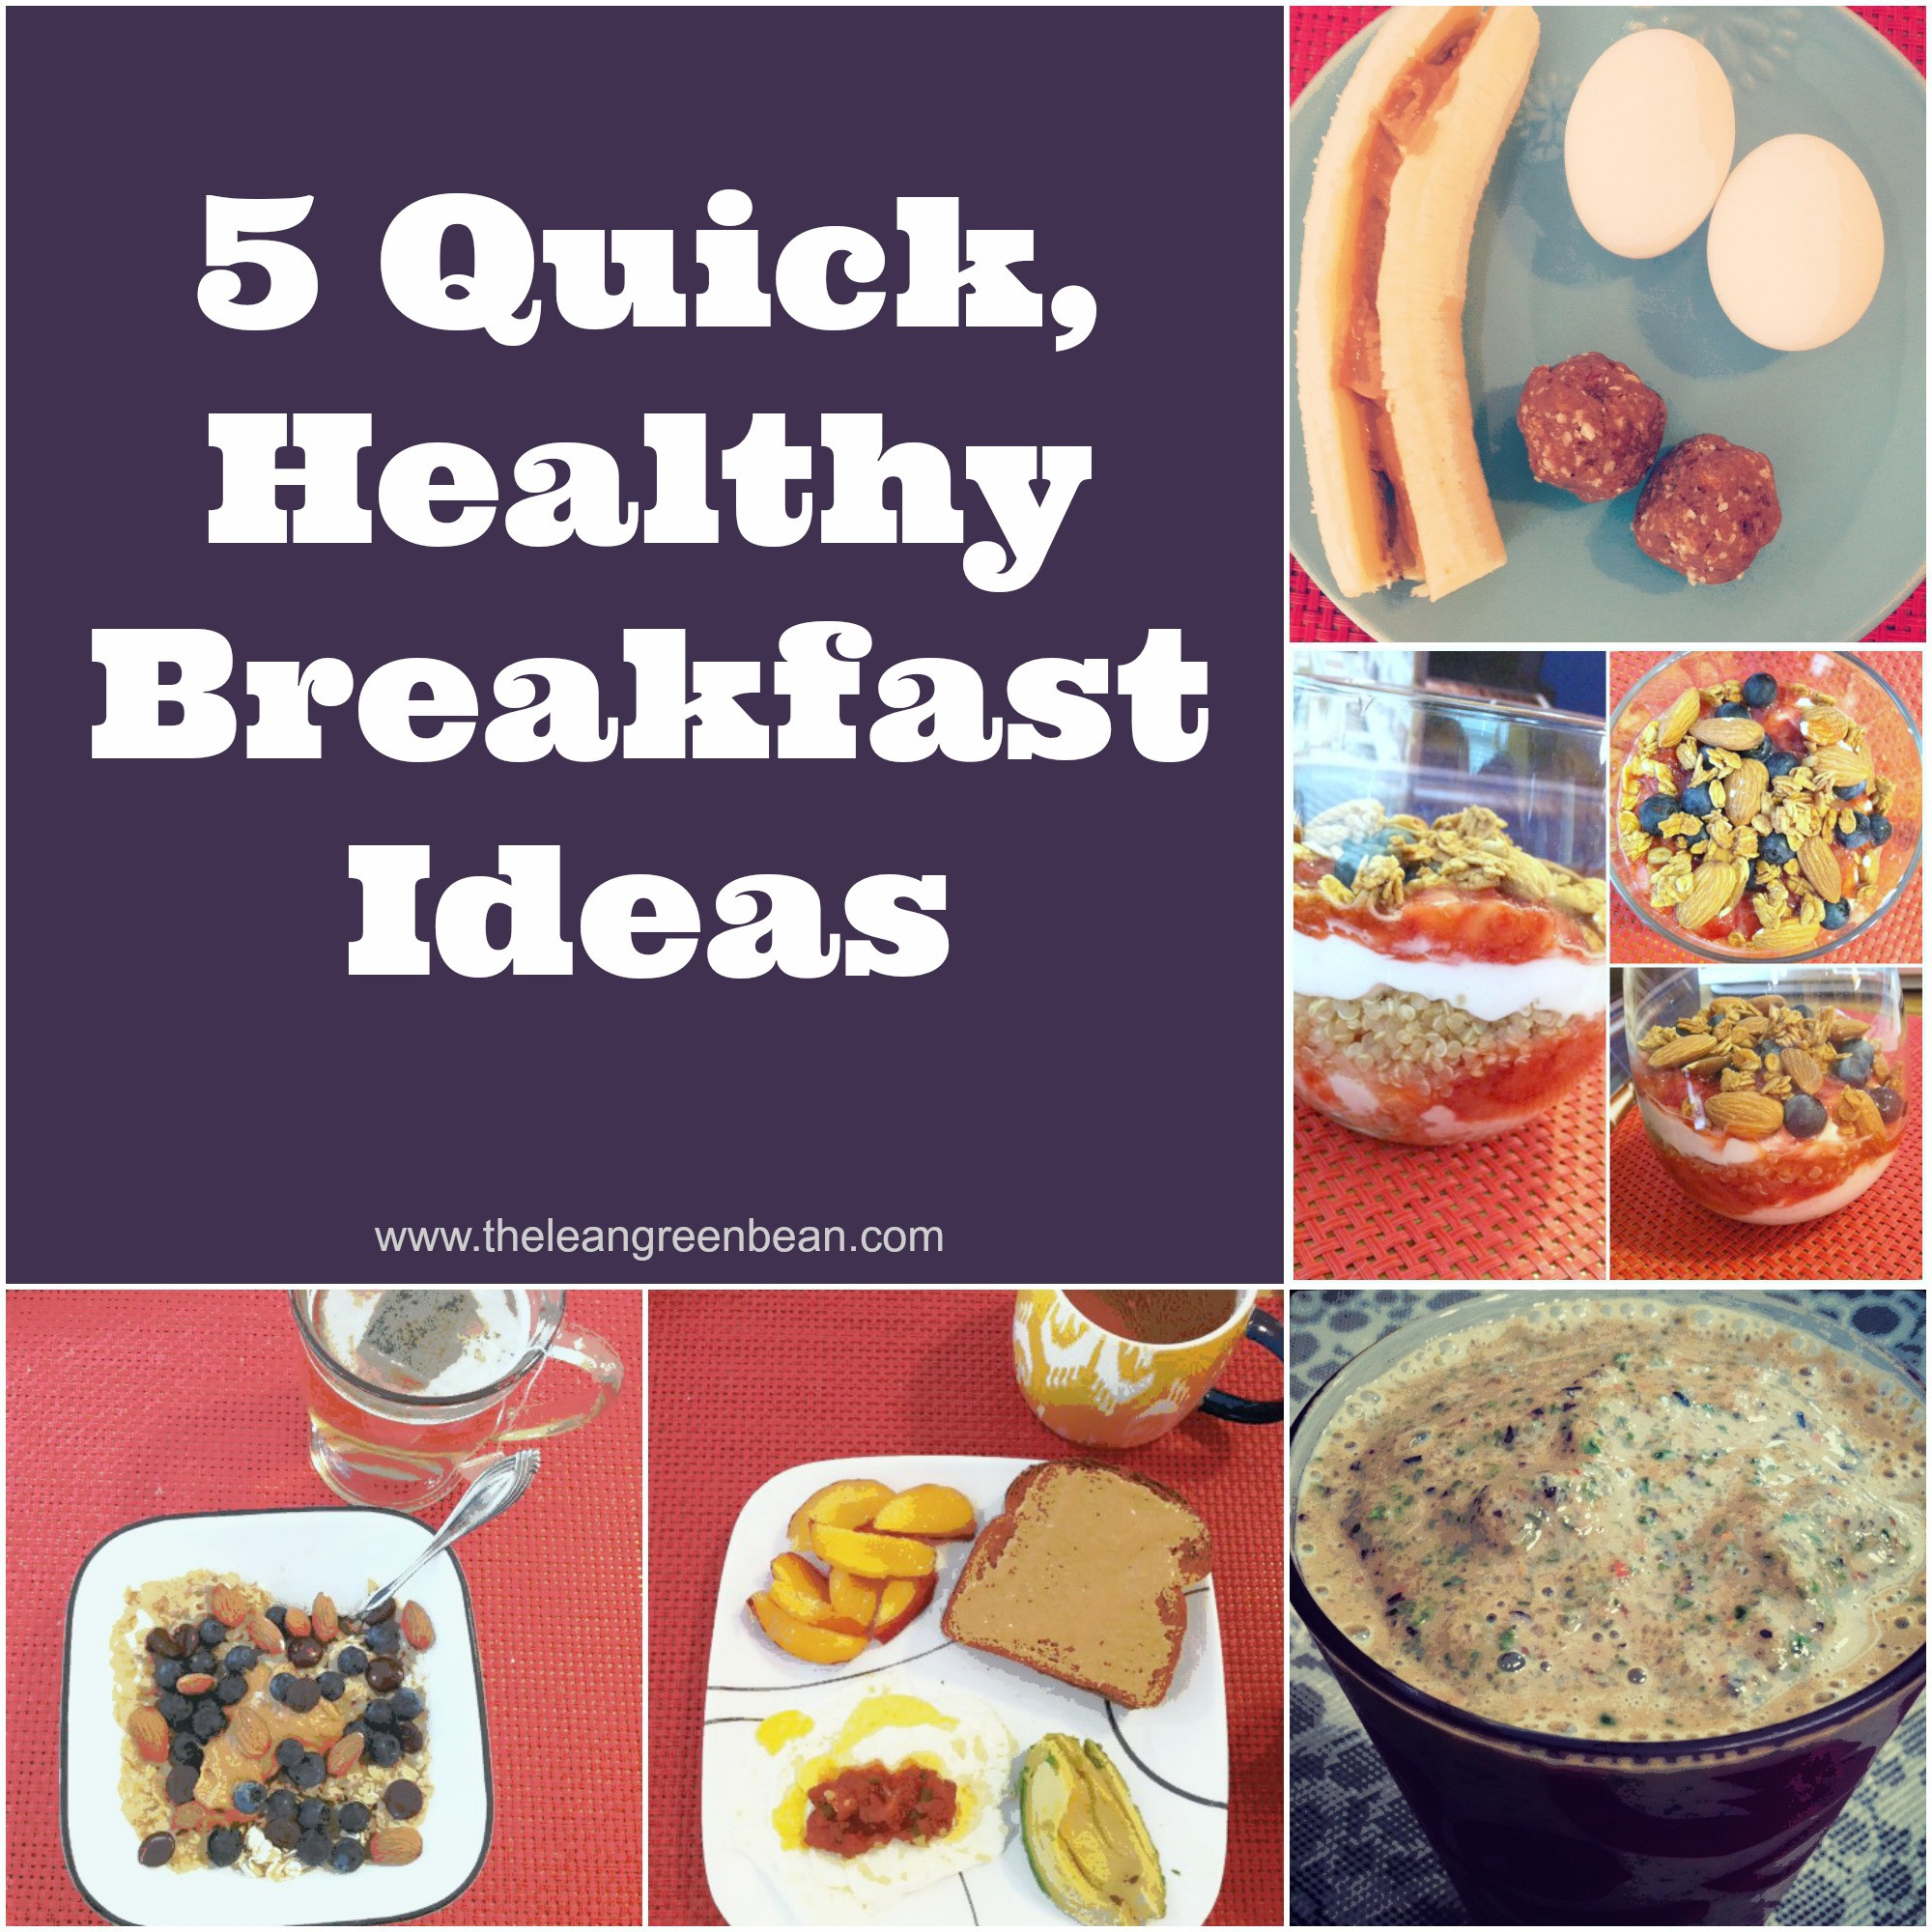 Easy Healthy Breakfast
 5 Quick Healthy Breakfast Ideas from a Registered Dietitian